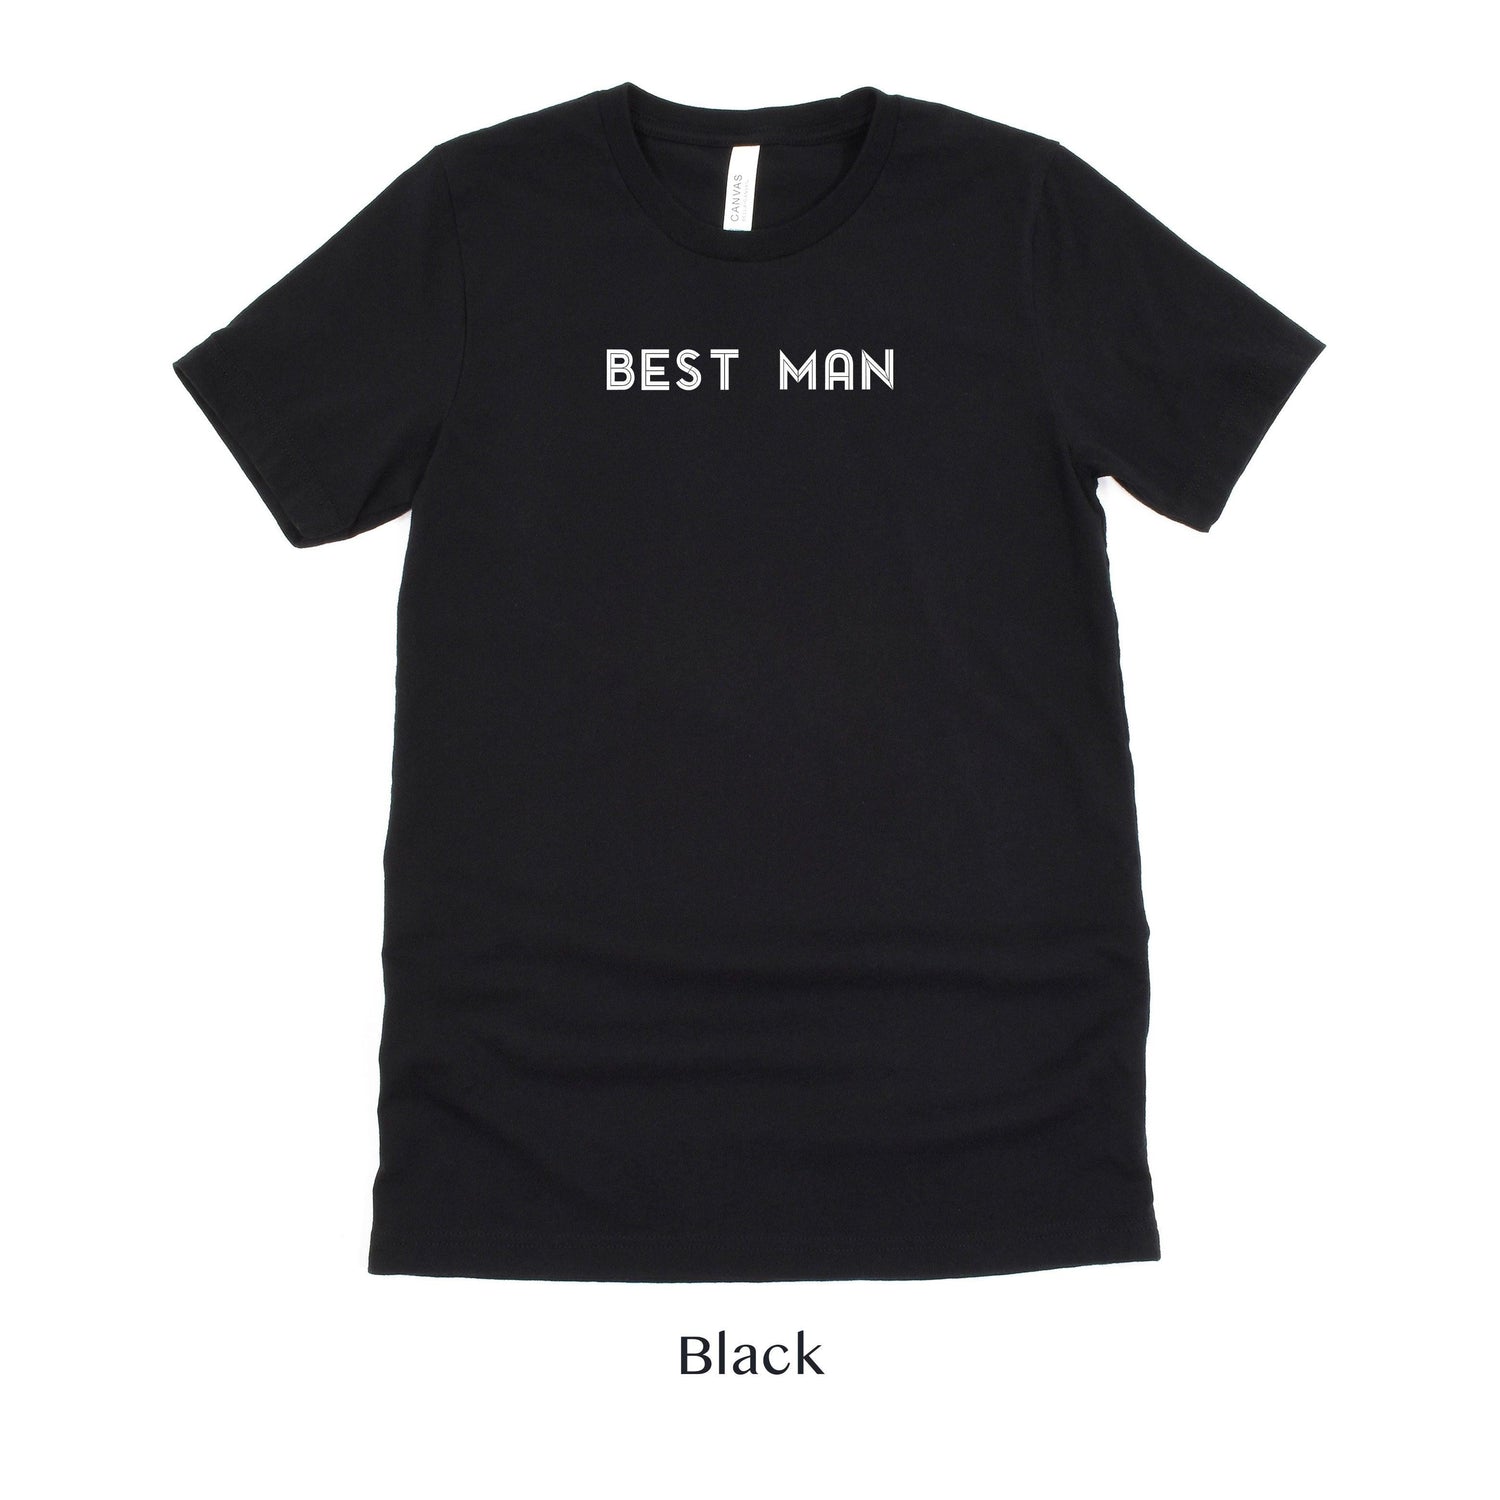 Best Man Shirt - Matching Wedding Party tshirts - Unisex t-shirt by Oaklynn Lane - Black Tee